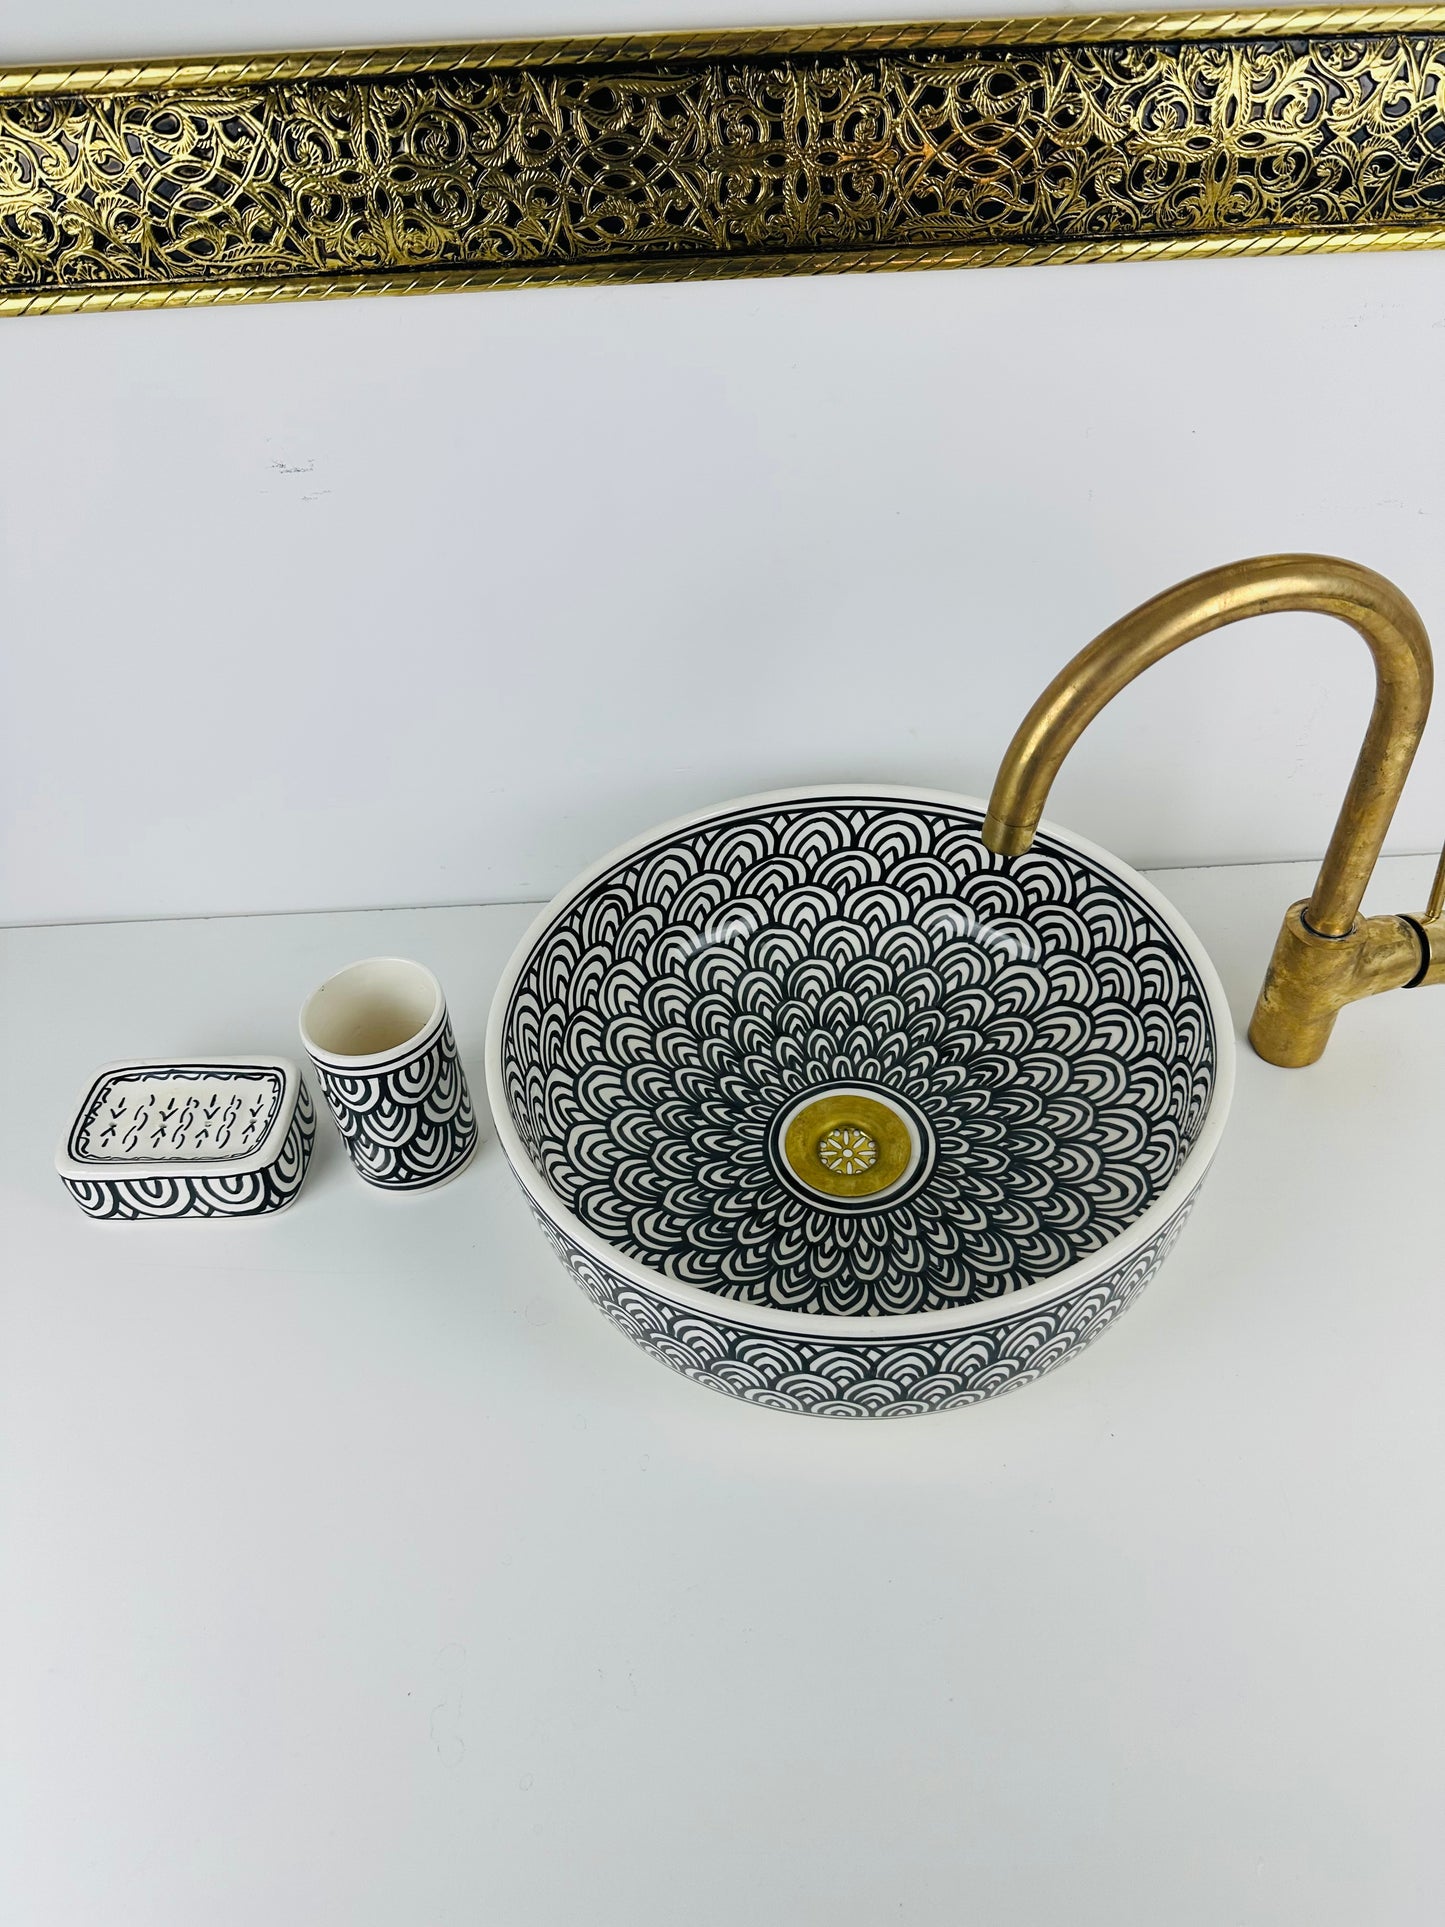 Chic Simplicity: Monochromatic Ceramic Sink